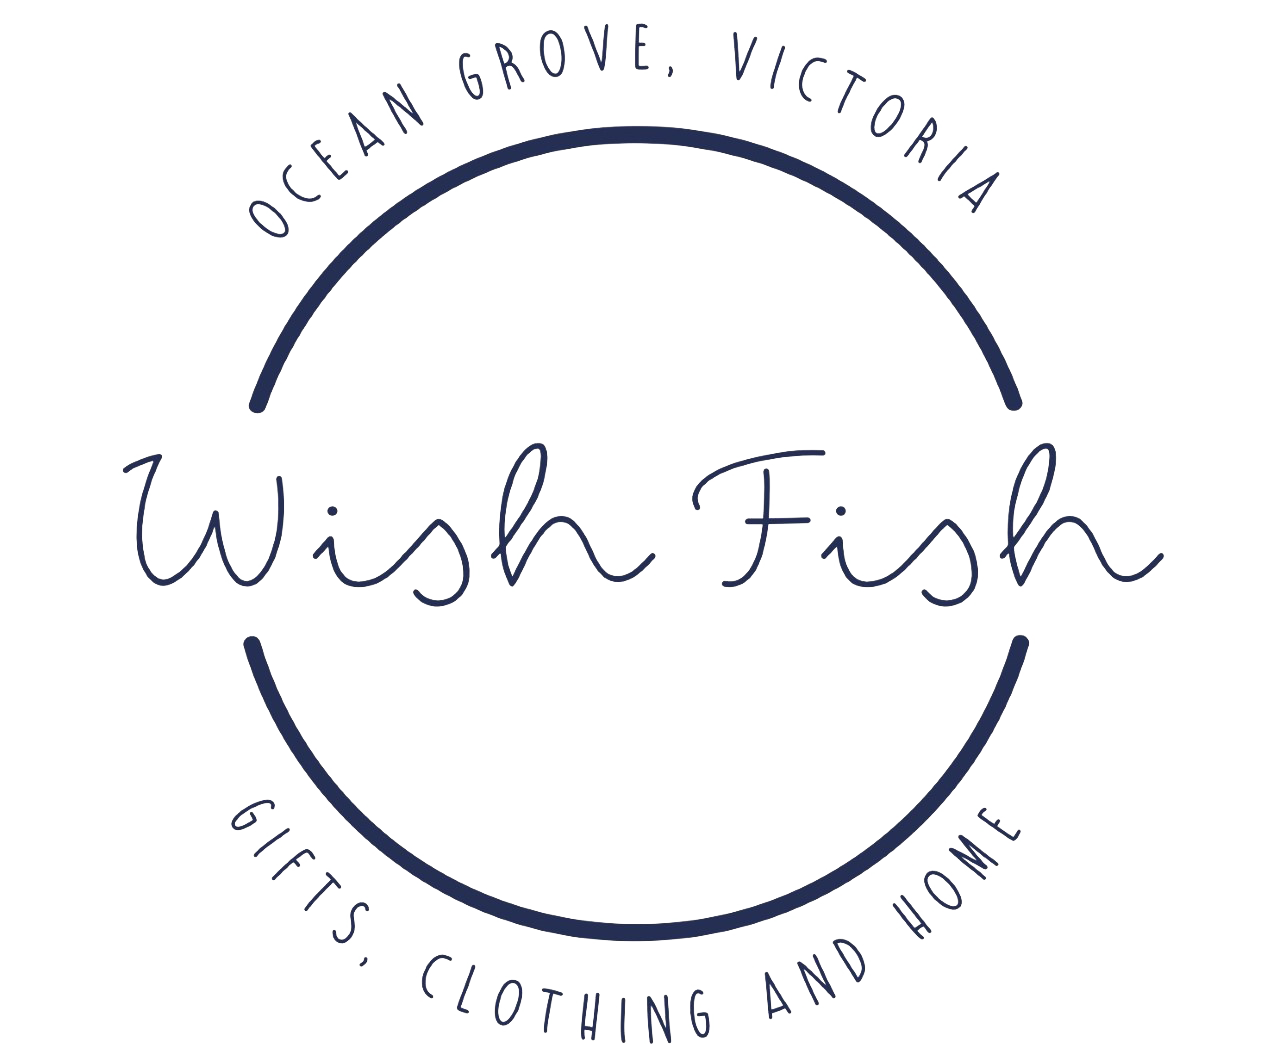 Wish Fish Gifts Ocean Grove | Wish Fish Gifts